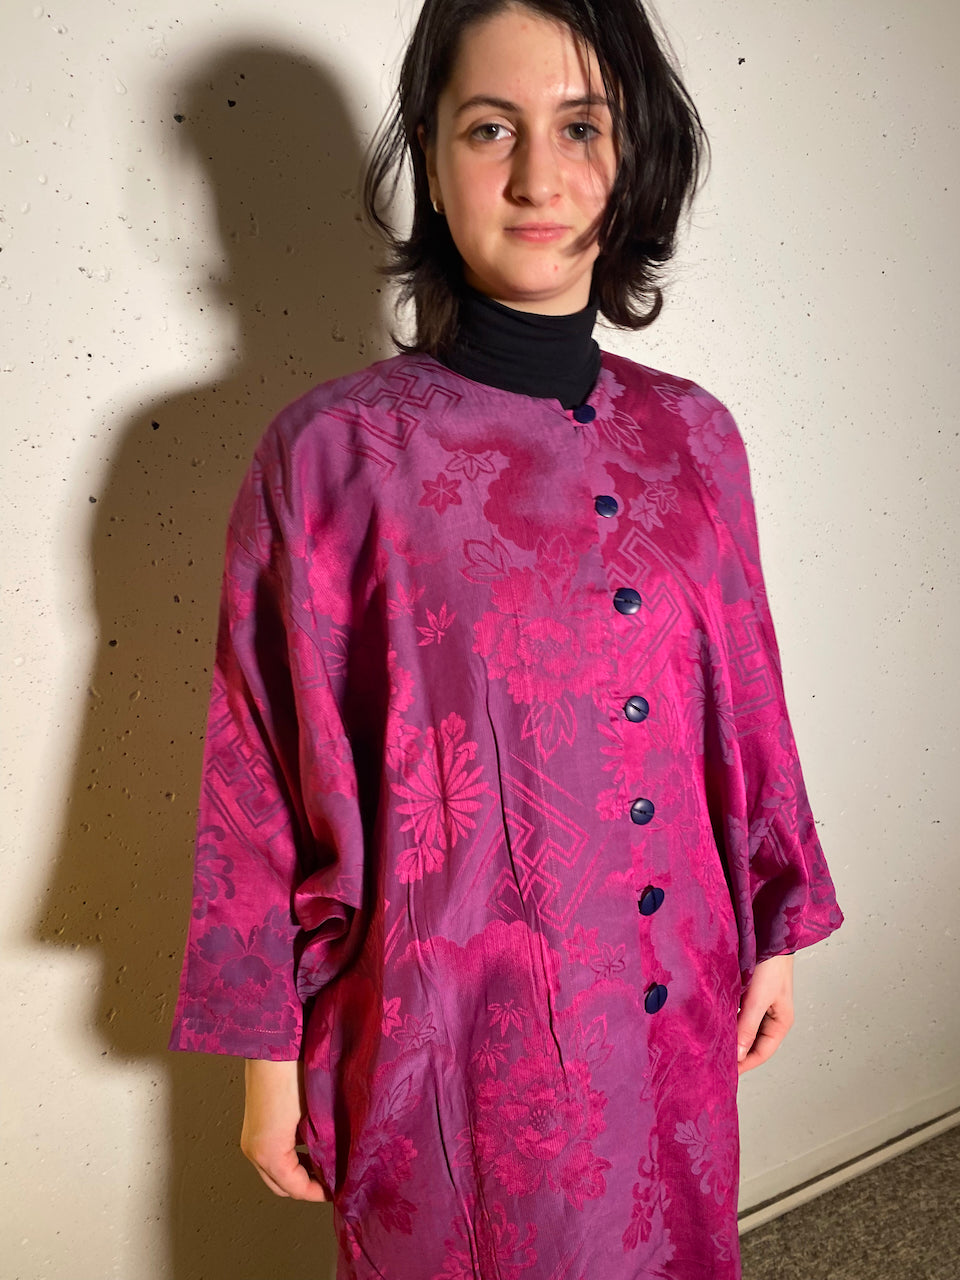 Flower-patterned dress jacket